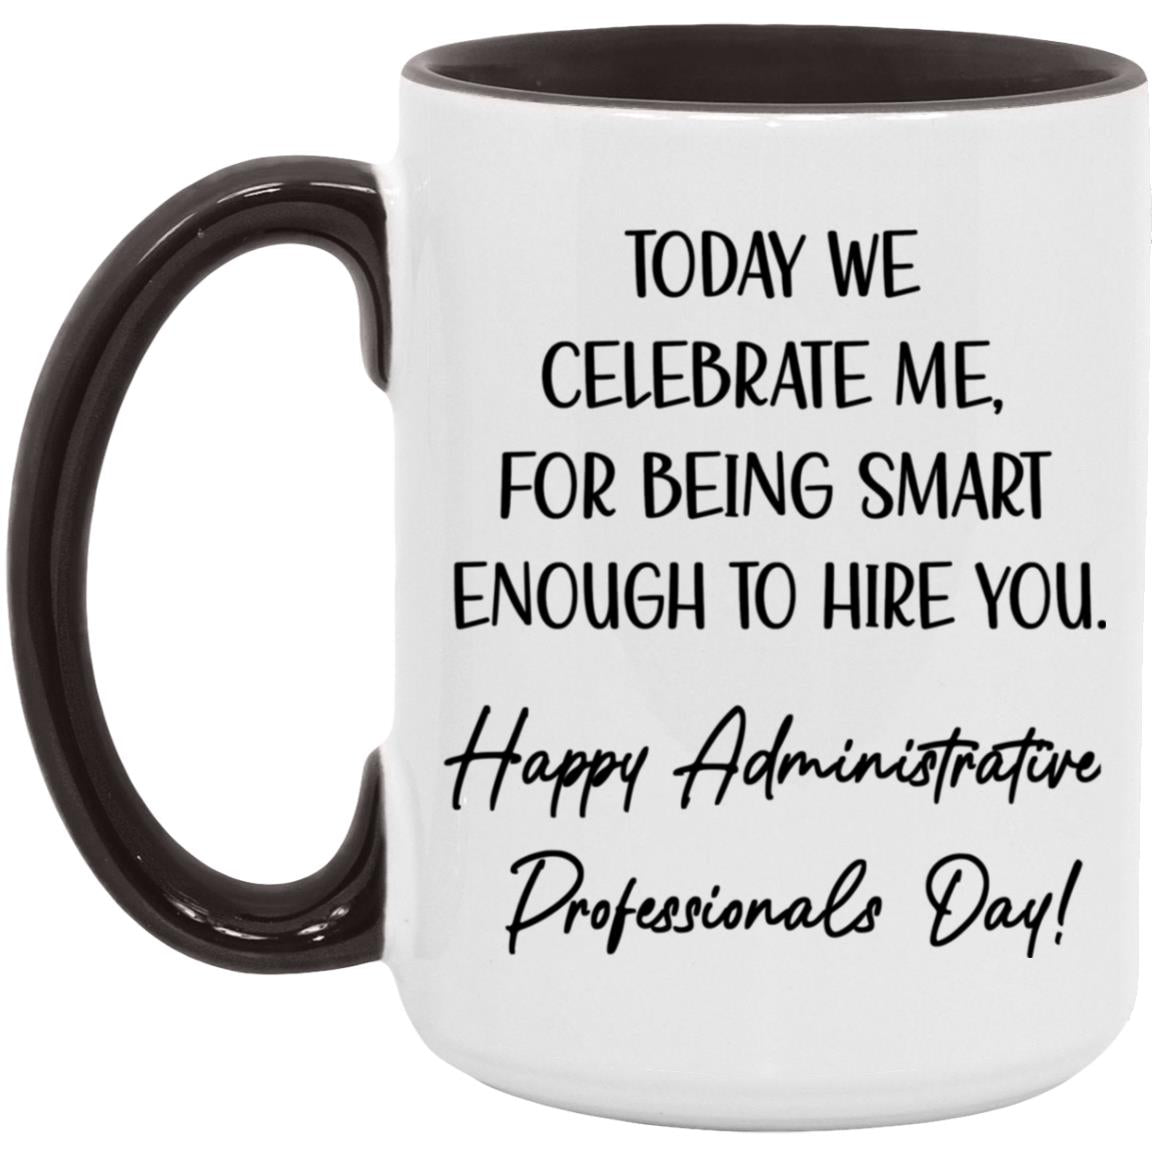 administrative professionals day gift idea